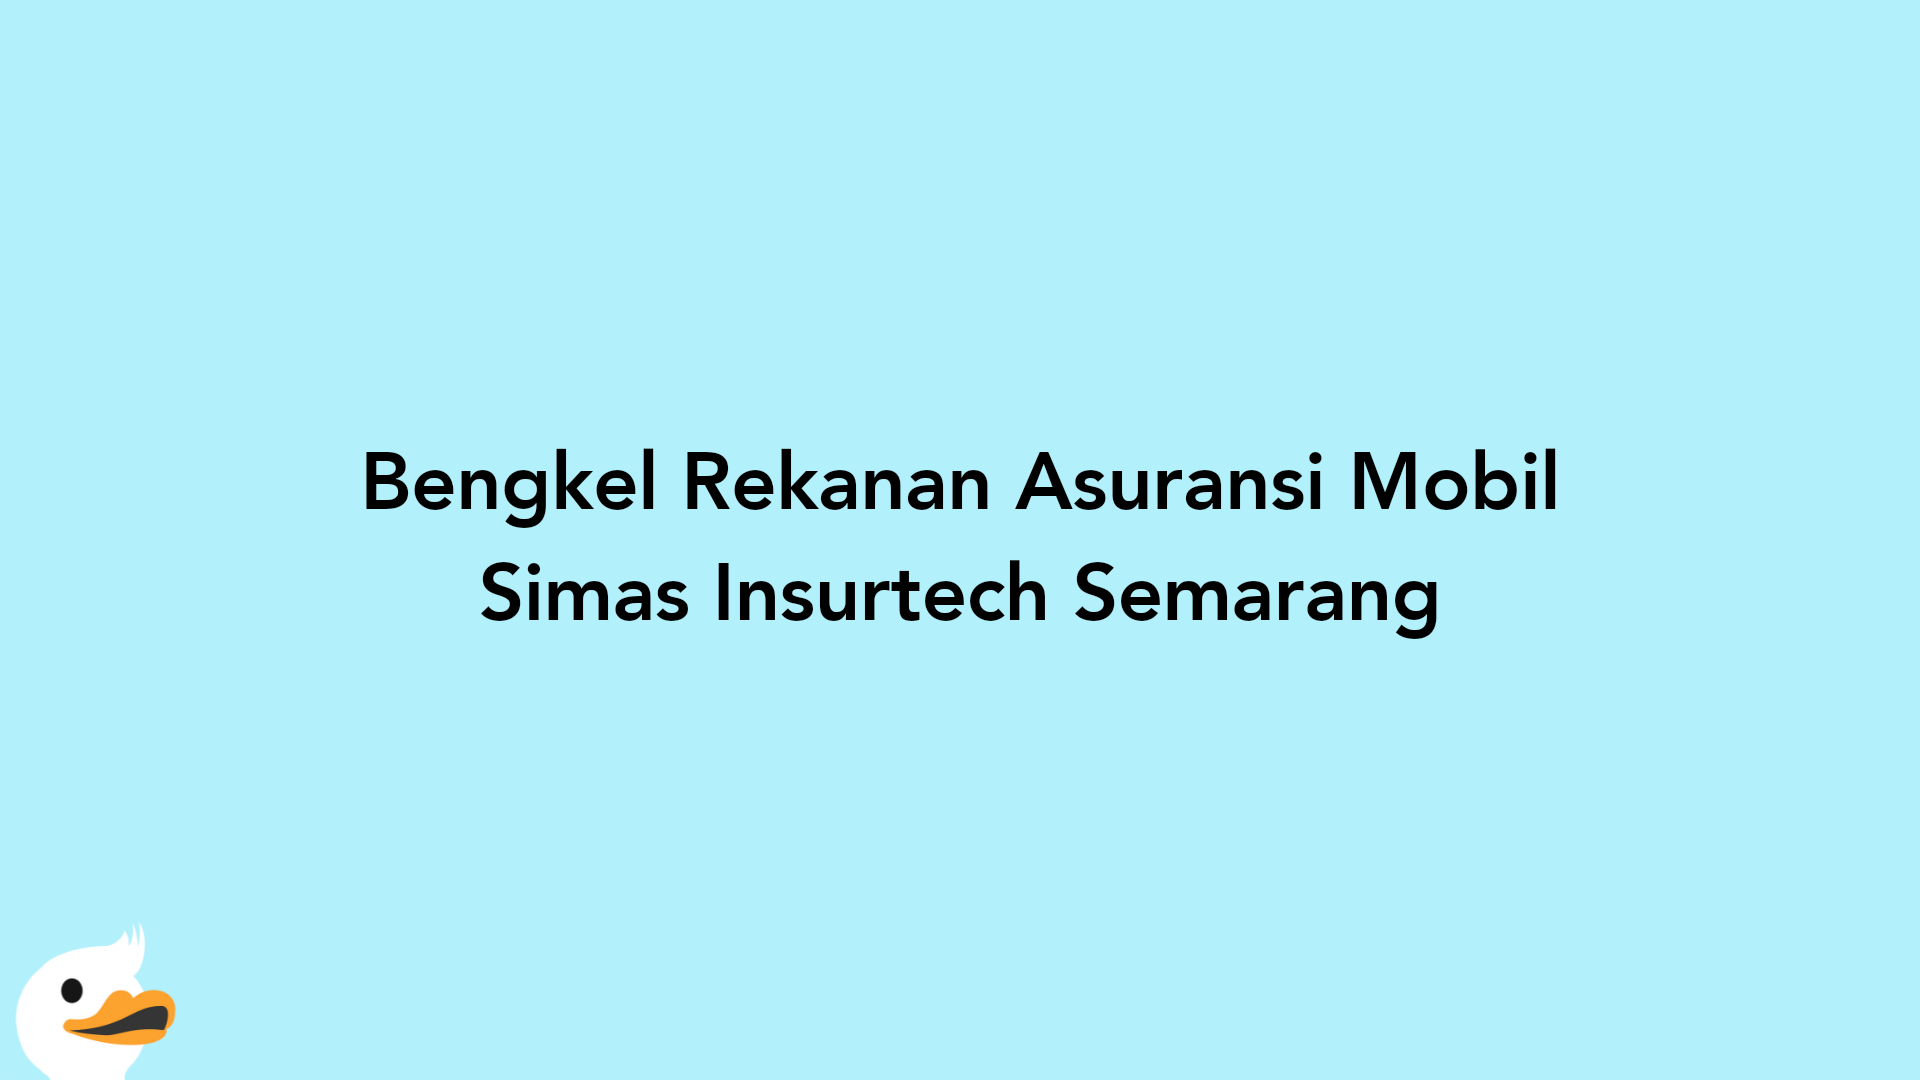 Bengkel Rekanan Asuransi Mobil Simas Insurtech Semarang